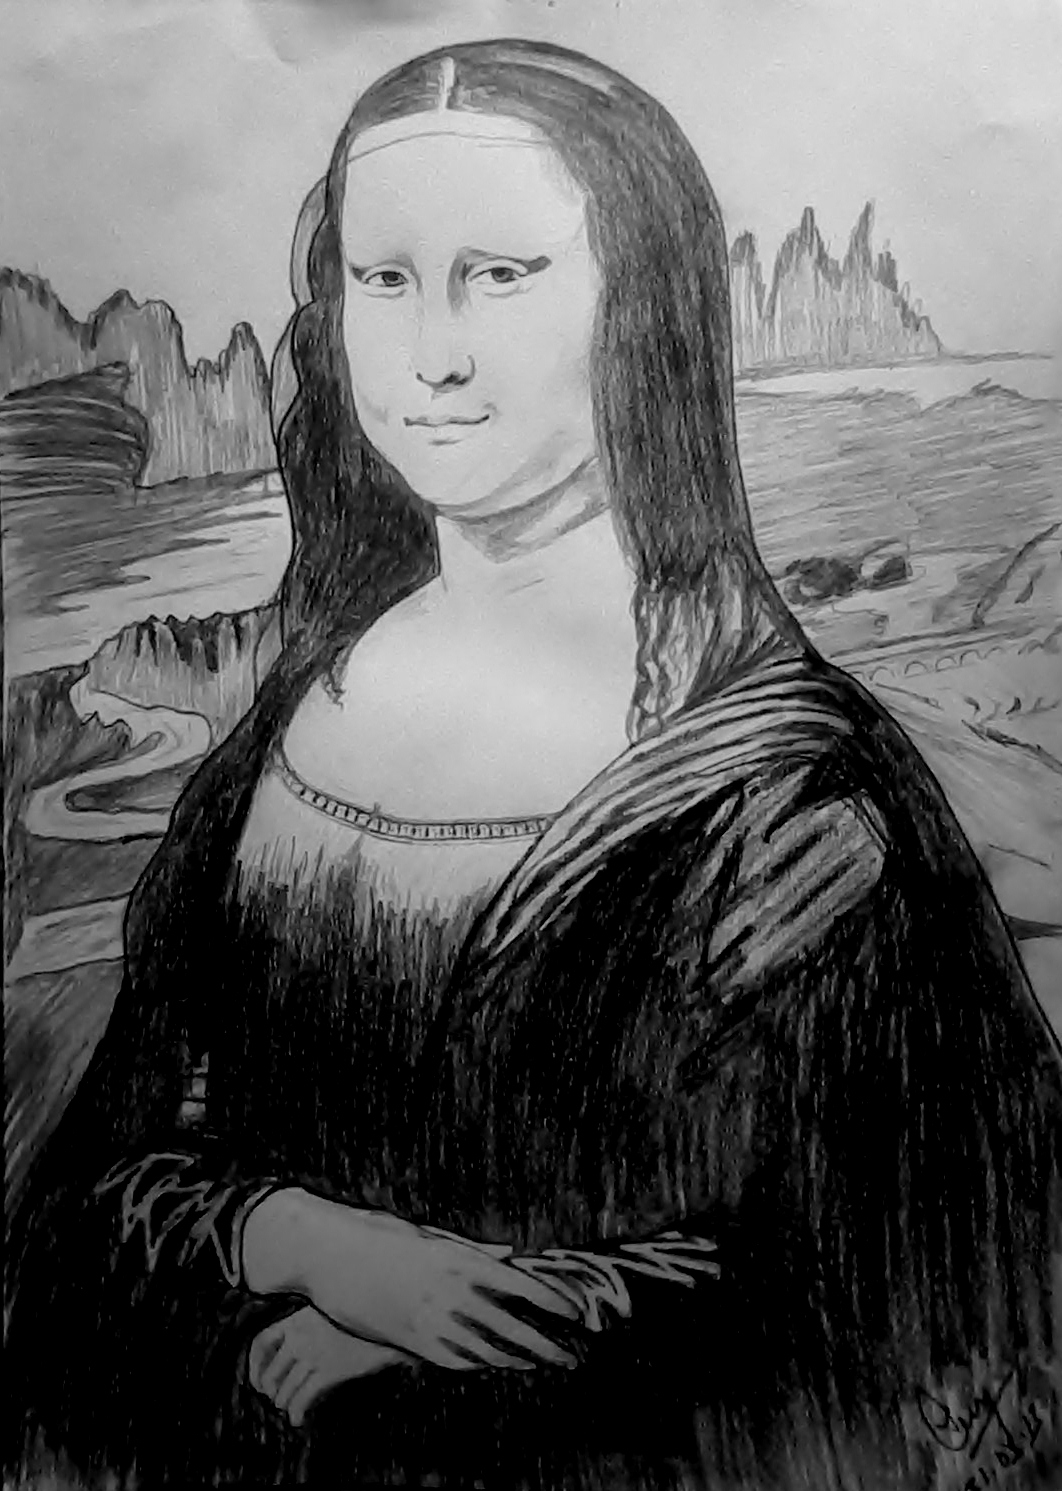 Mona Lisa by Leonardo da Vinci coloring page - Download, Print or Color  Online for Free